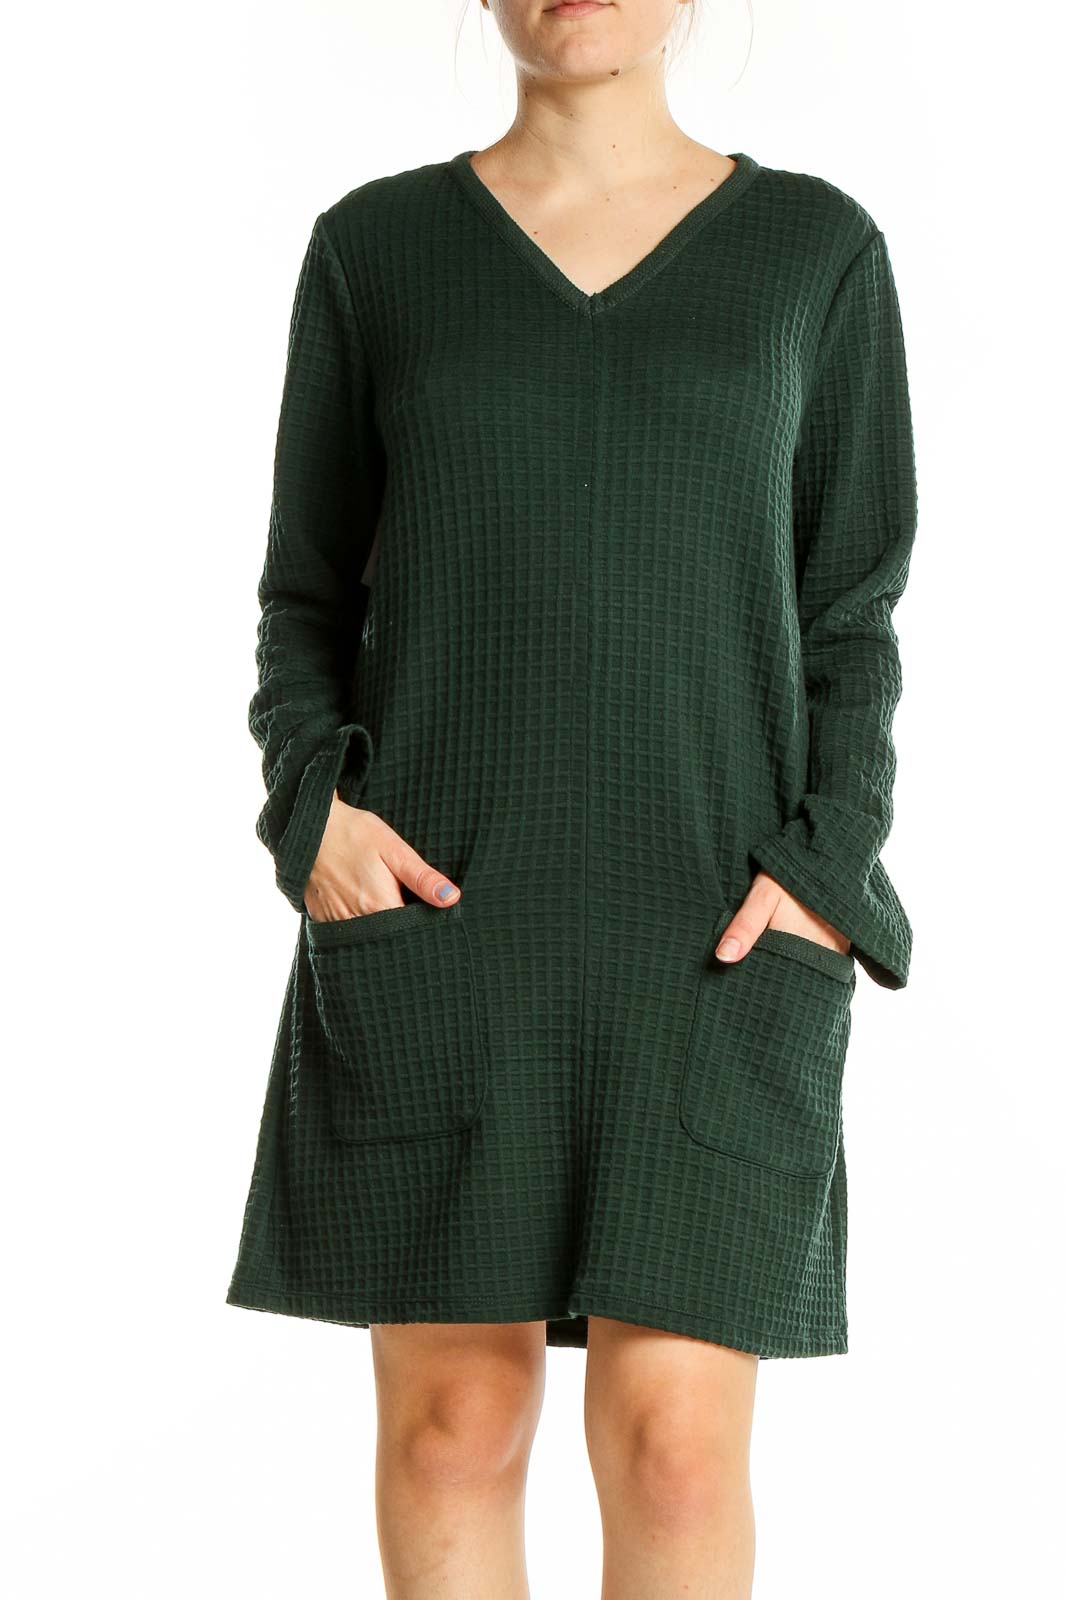 Green A-Line V Neck Long Sleeve Textured Dress Front